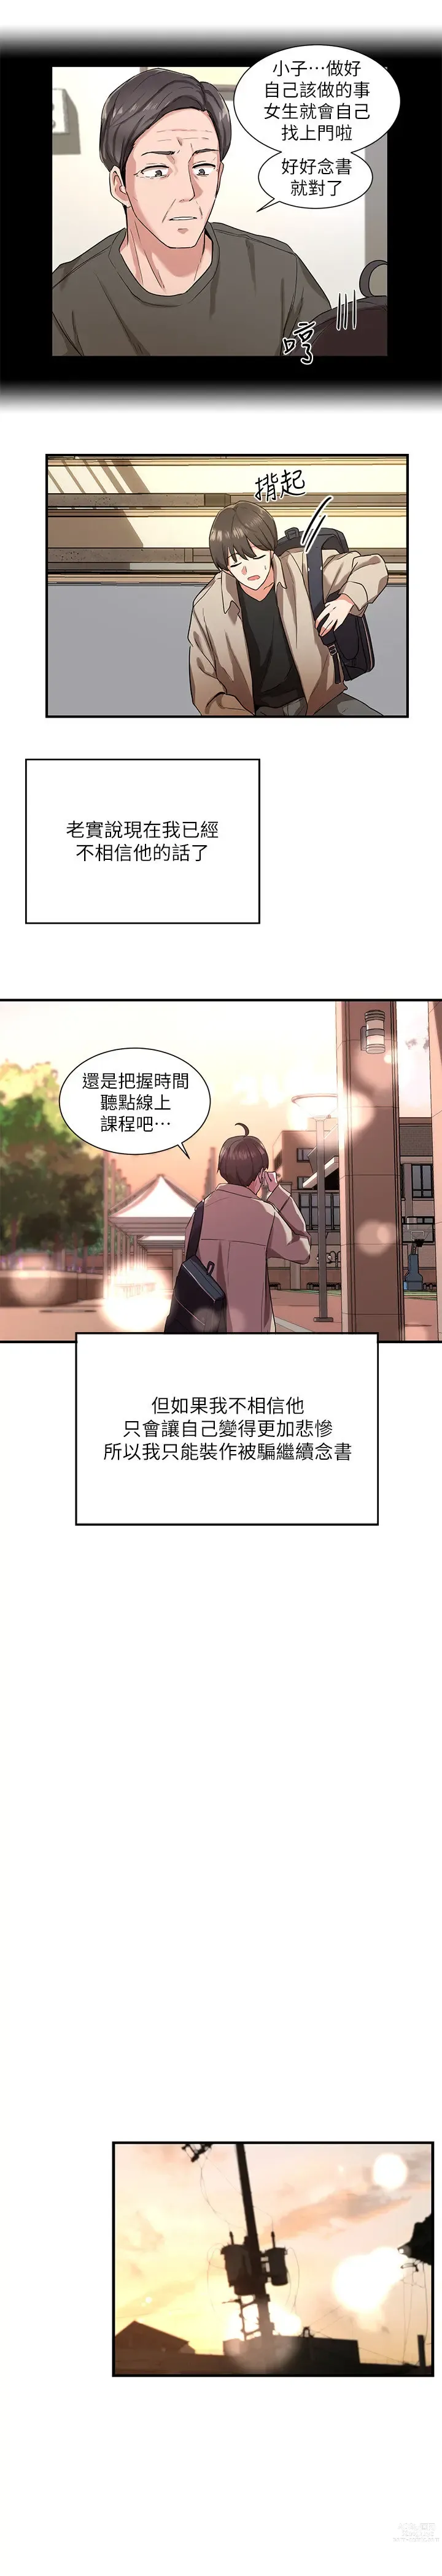 Page 8 of manga 社团学姐/Circles 1-50